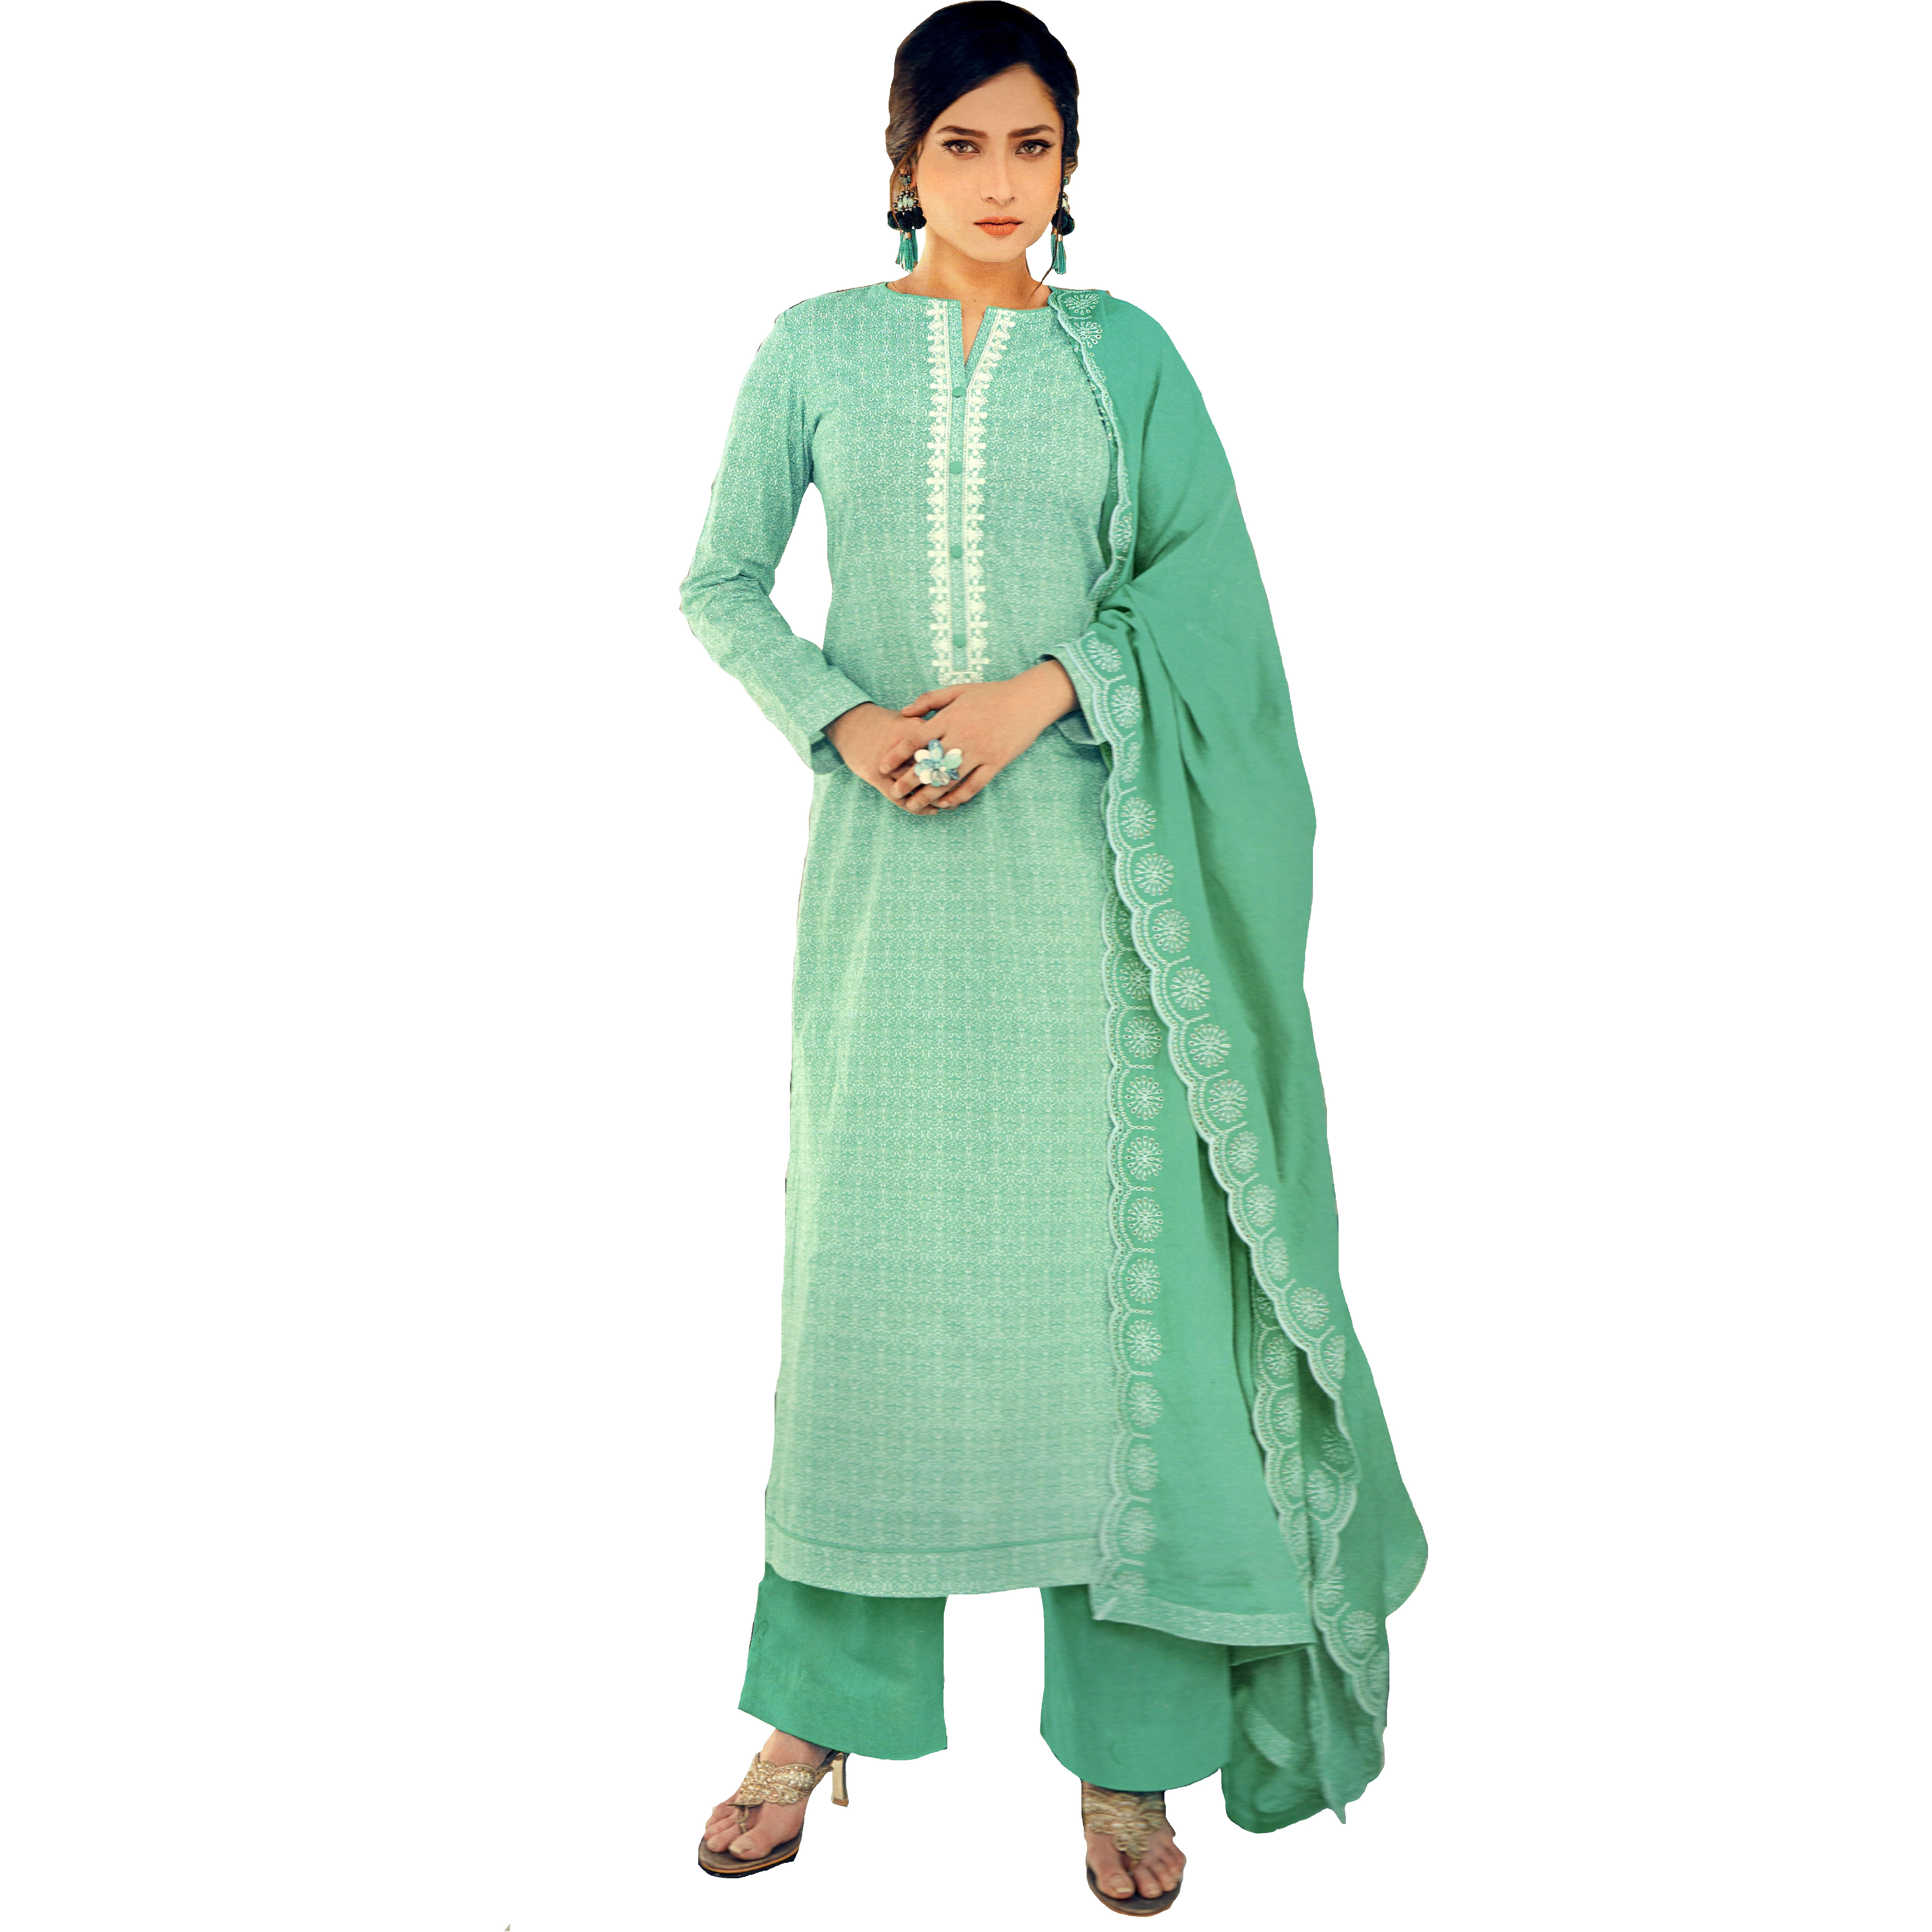 MAHATI lawn cotton salwar suits with chiffon dupatta (Size: M)